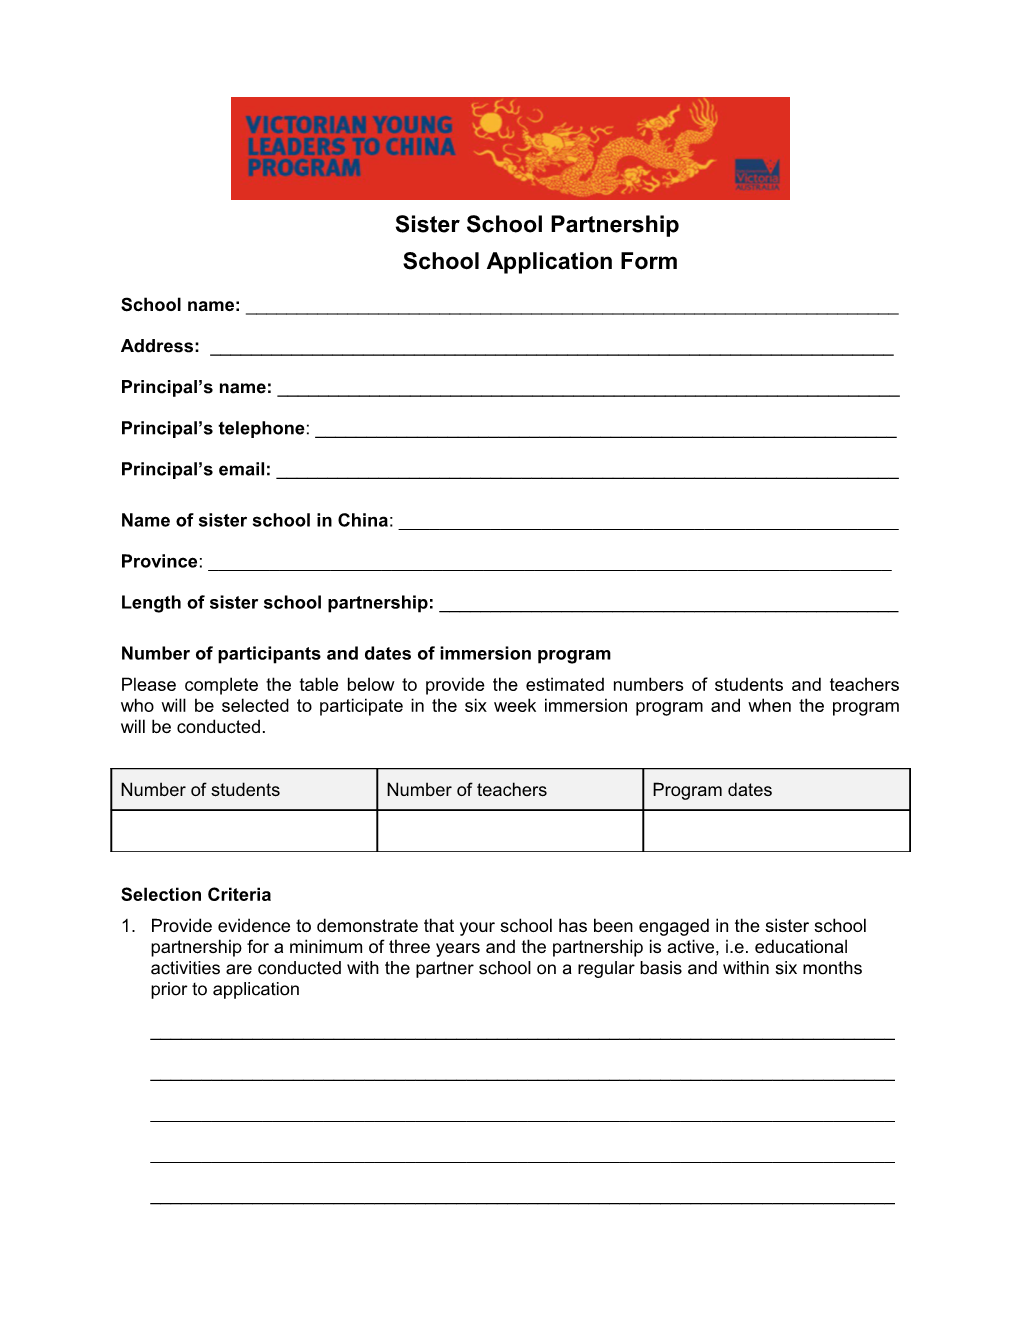 Sister School Application Form